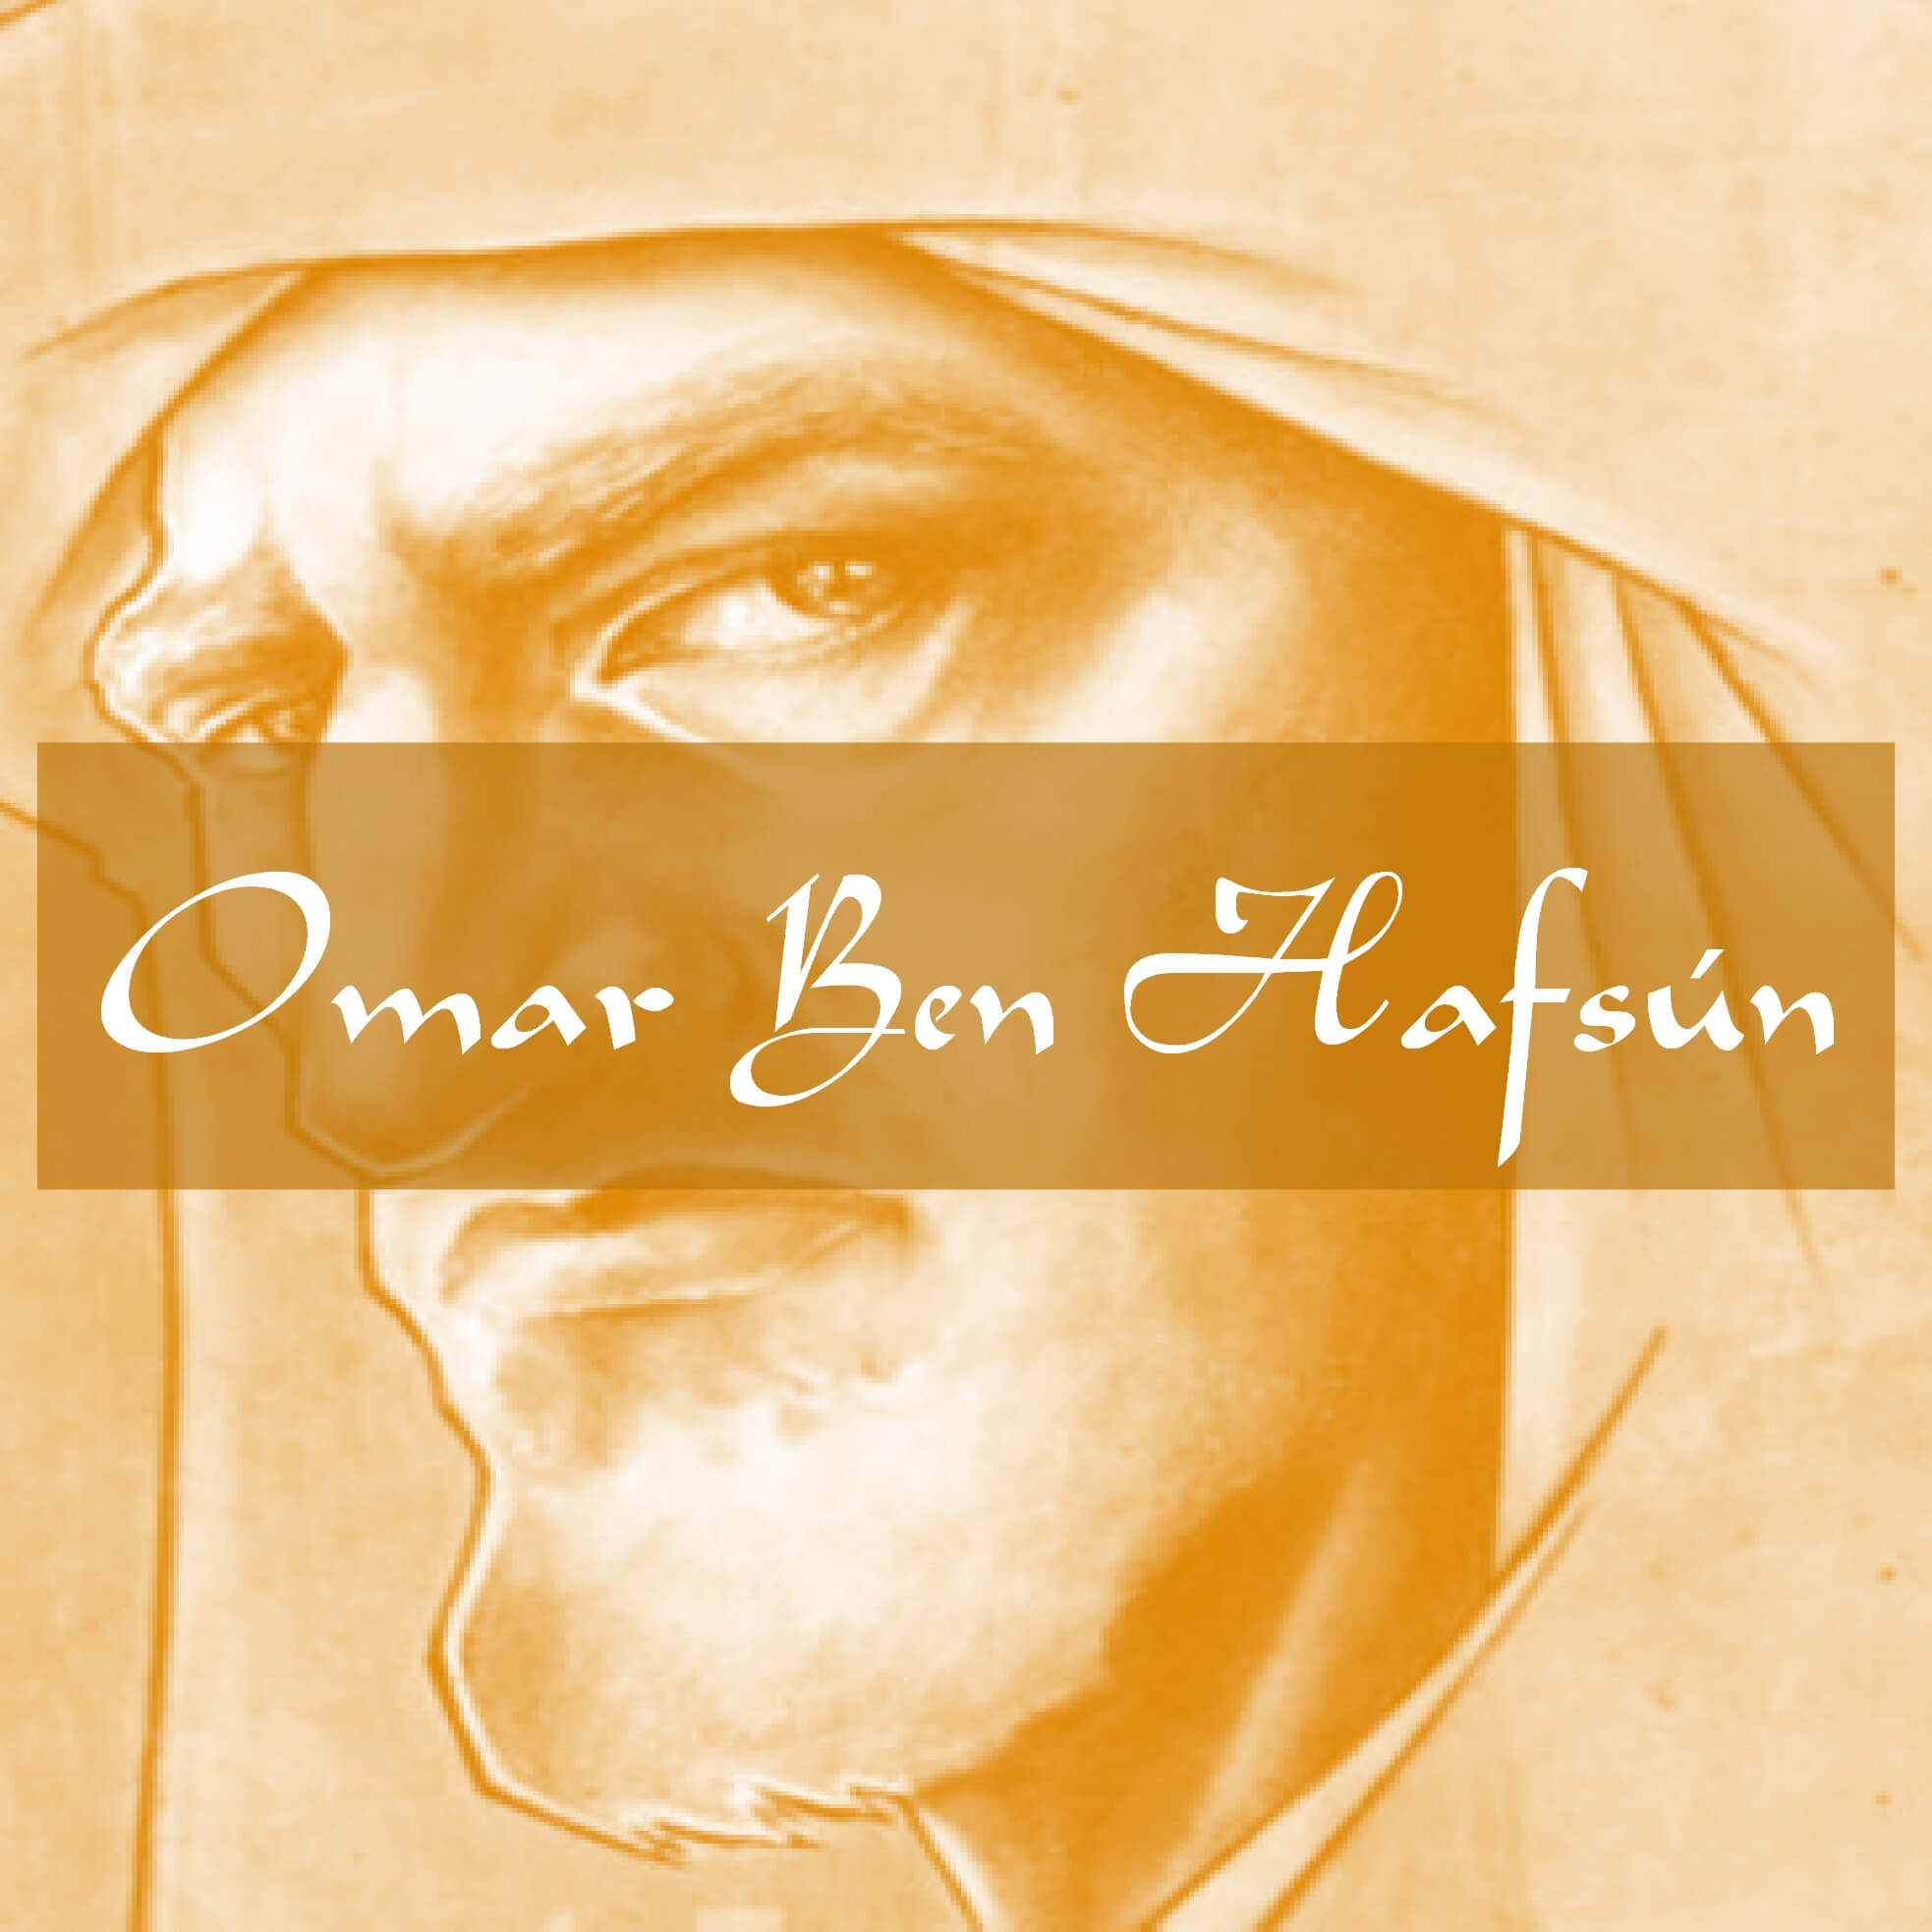 Omar Ben Hafsun Parauta Histori Malaga